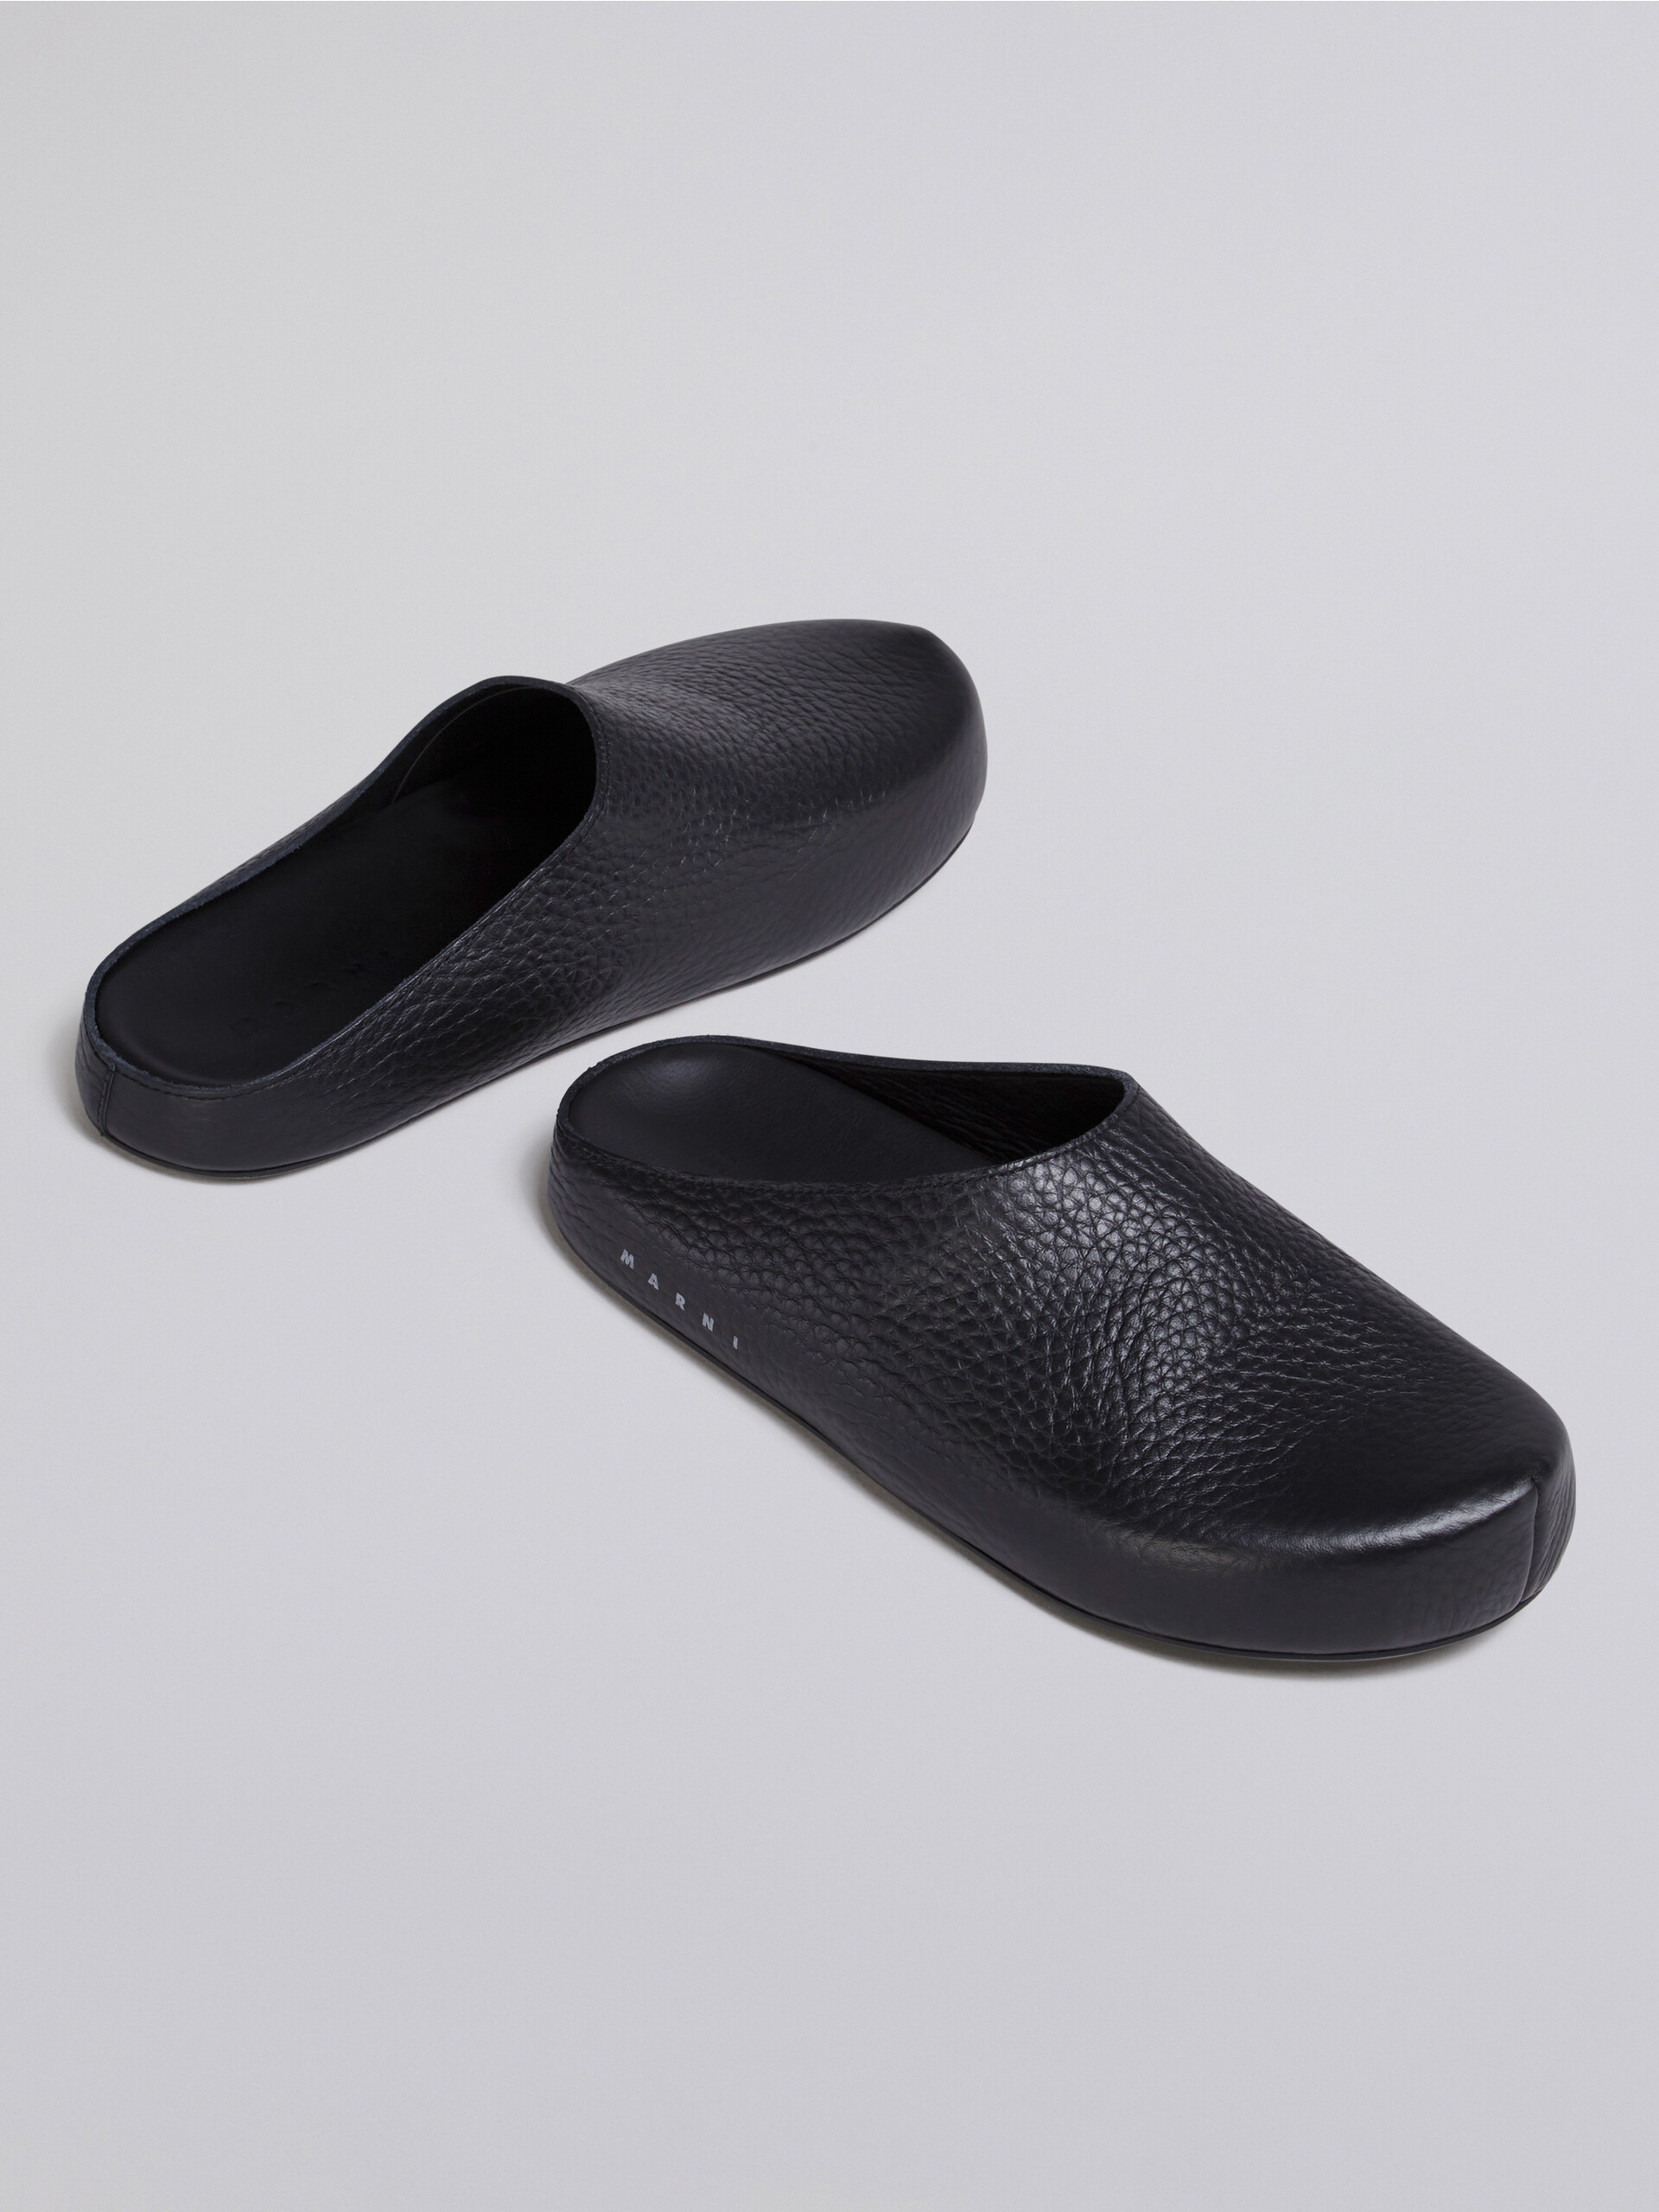 Unisex-Sandale aus schwarzem genarbtem Kalbsleder - Holzschuhe - Image 5